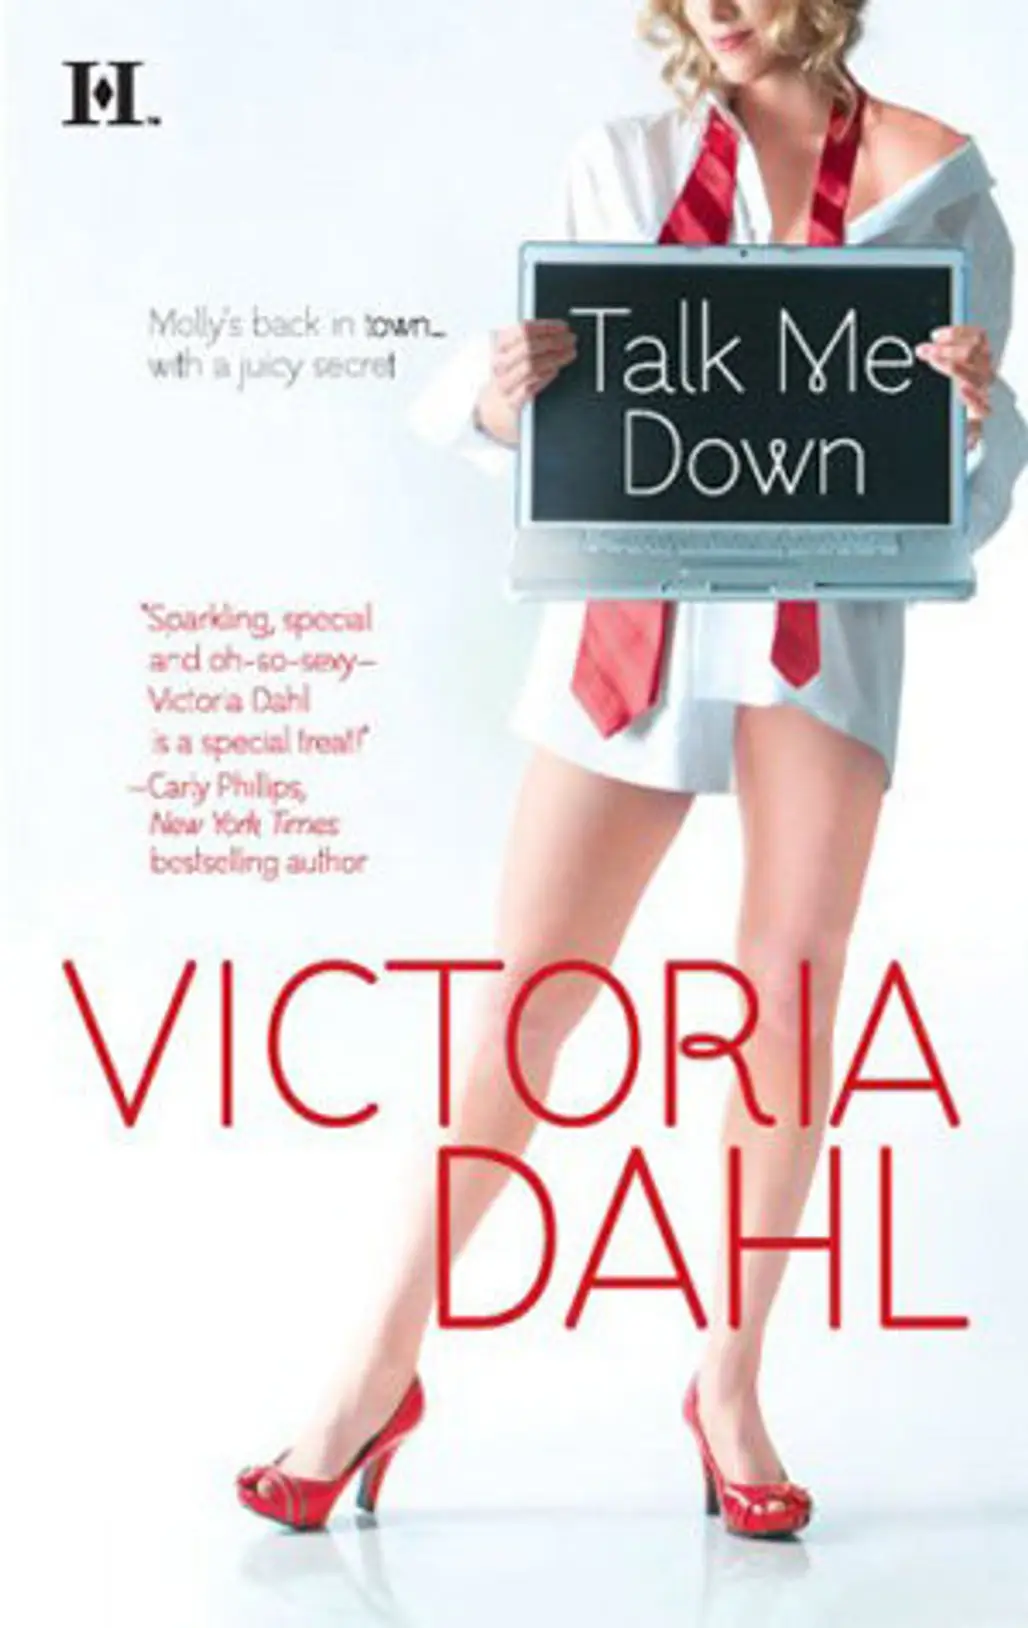 Talk Me down by Victoria Dahl